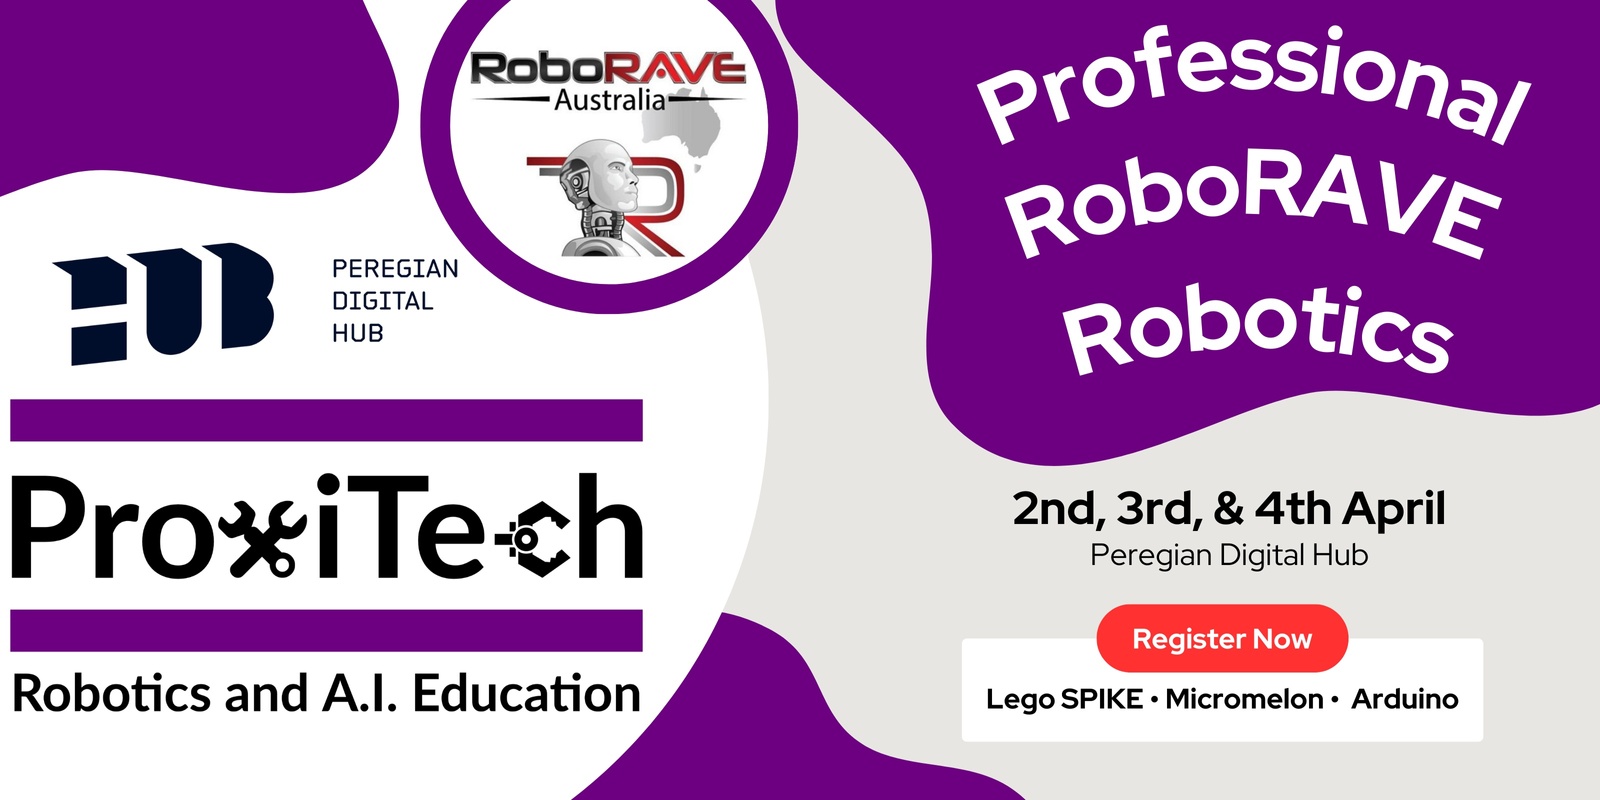 Banner image for Professional RoboRAVE Robotics @ Peregian Digital Hub